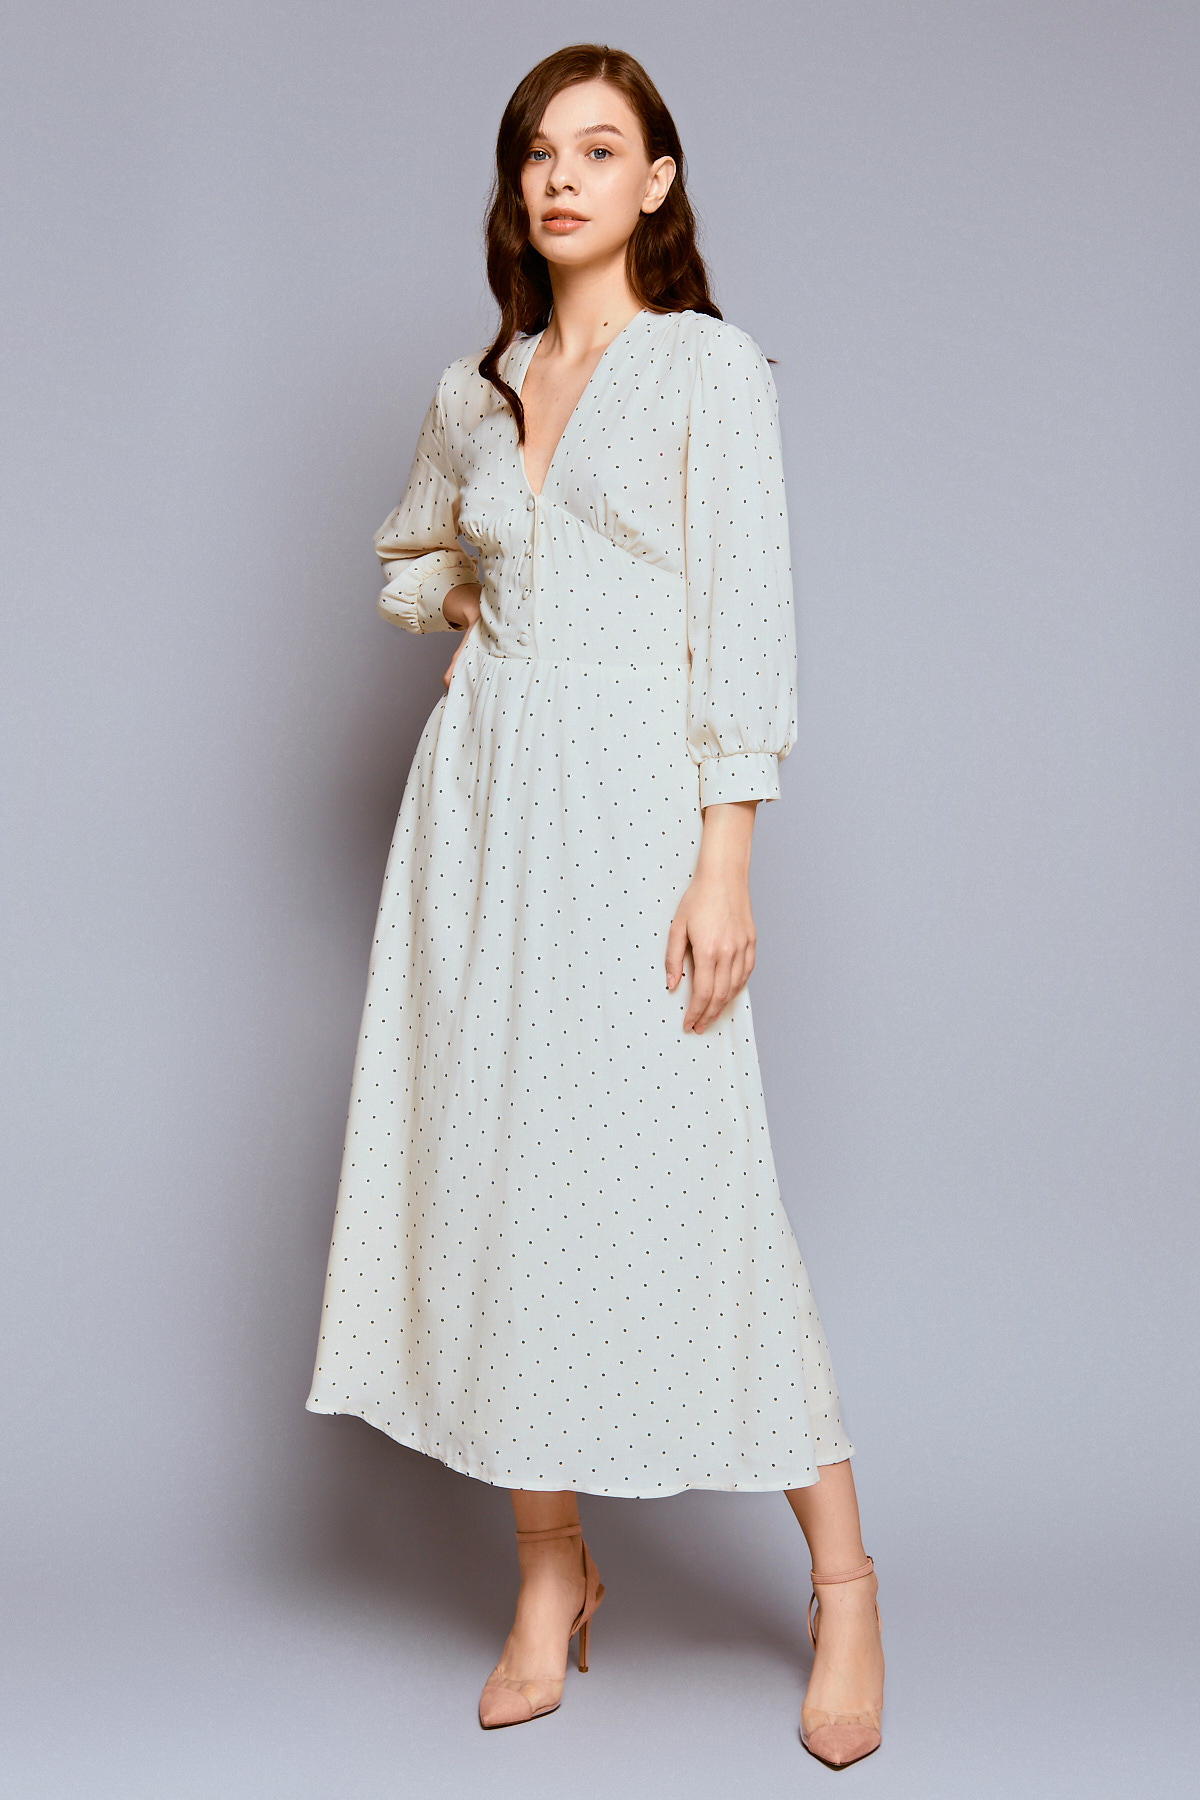 Milky white polka dot midi dress with V-neck and short sleeves, photo 2